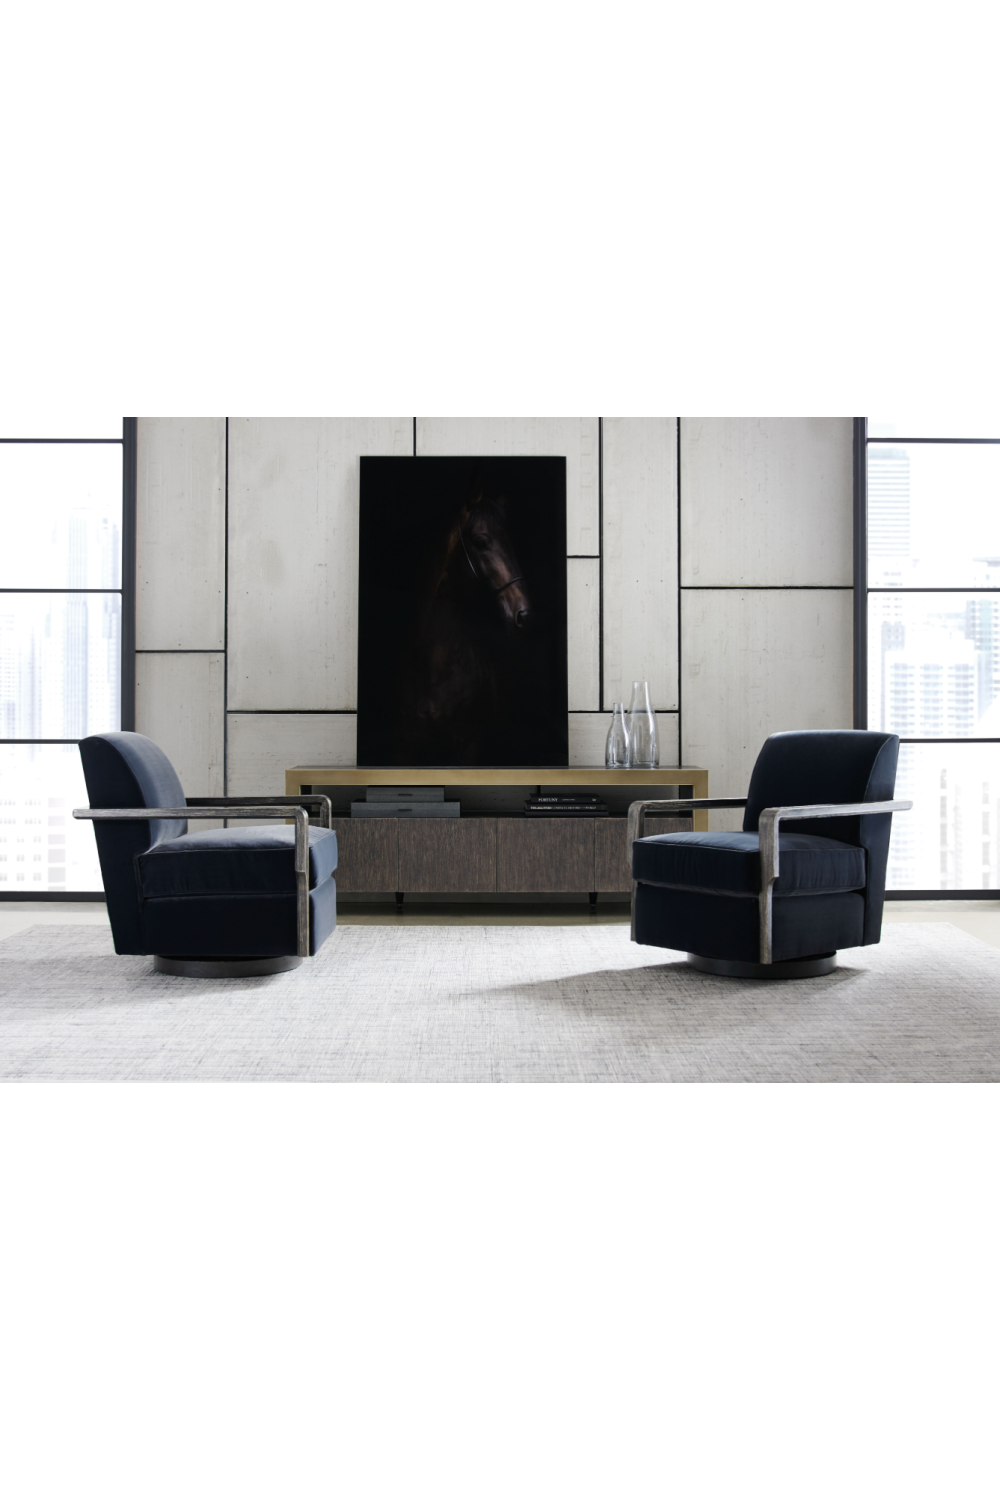 Black Art Deco Swivel Chair | Caracole Rewind | Oroa.com